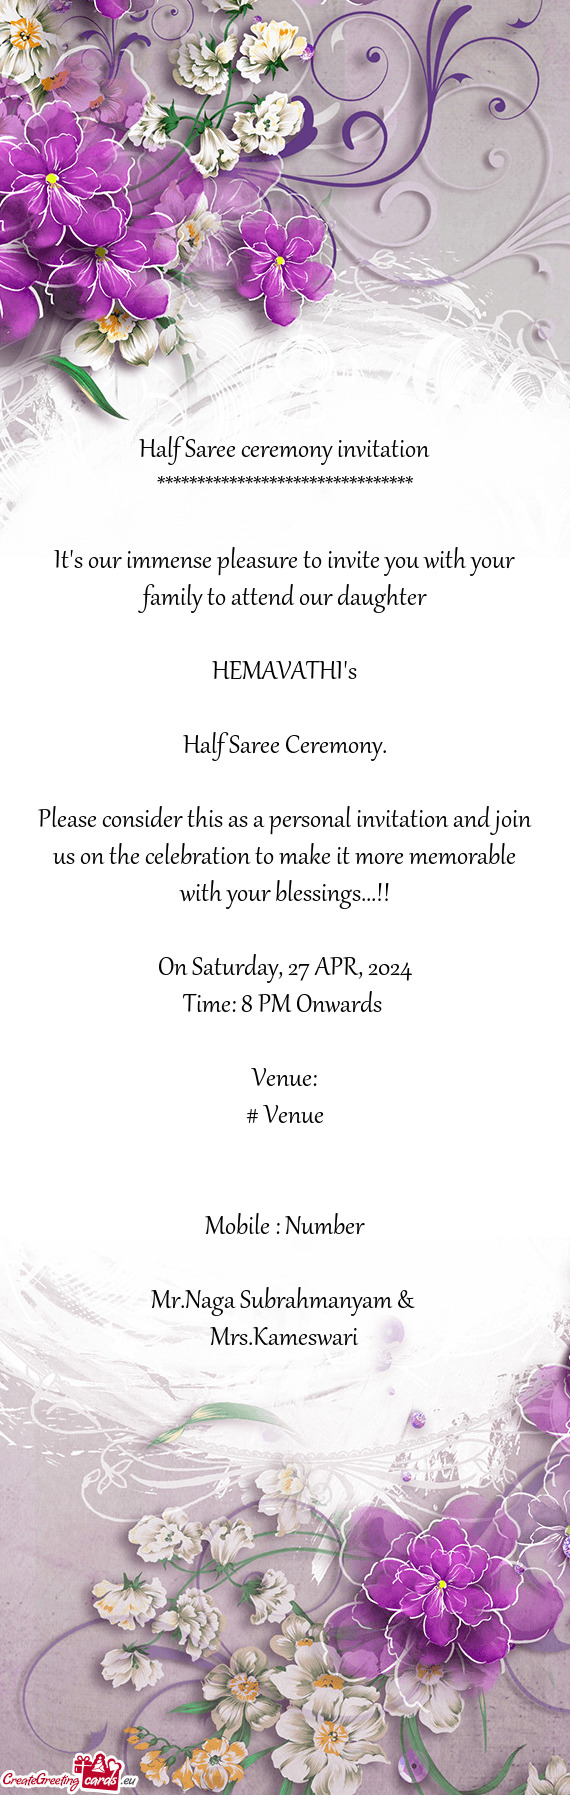 HEMAVATHI's